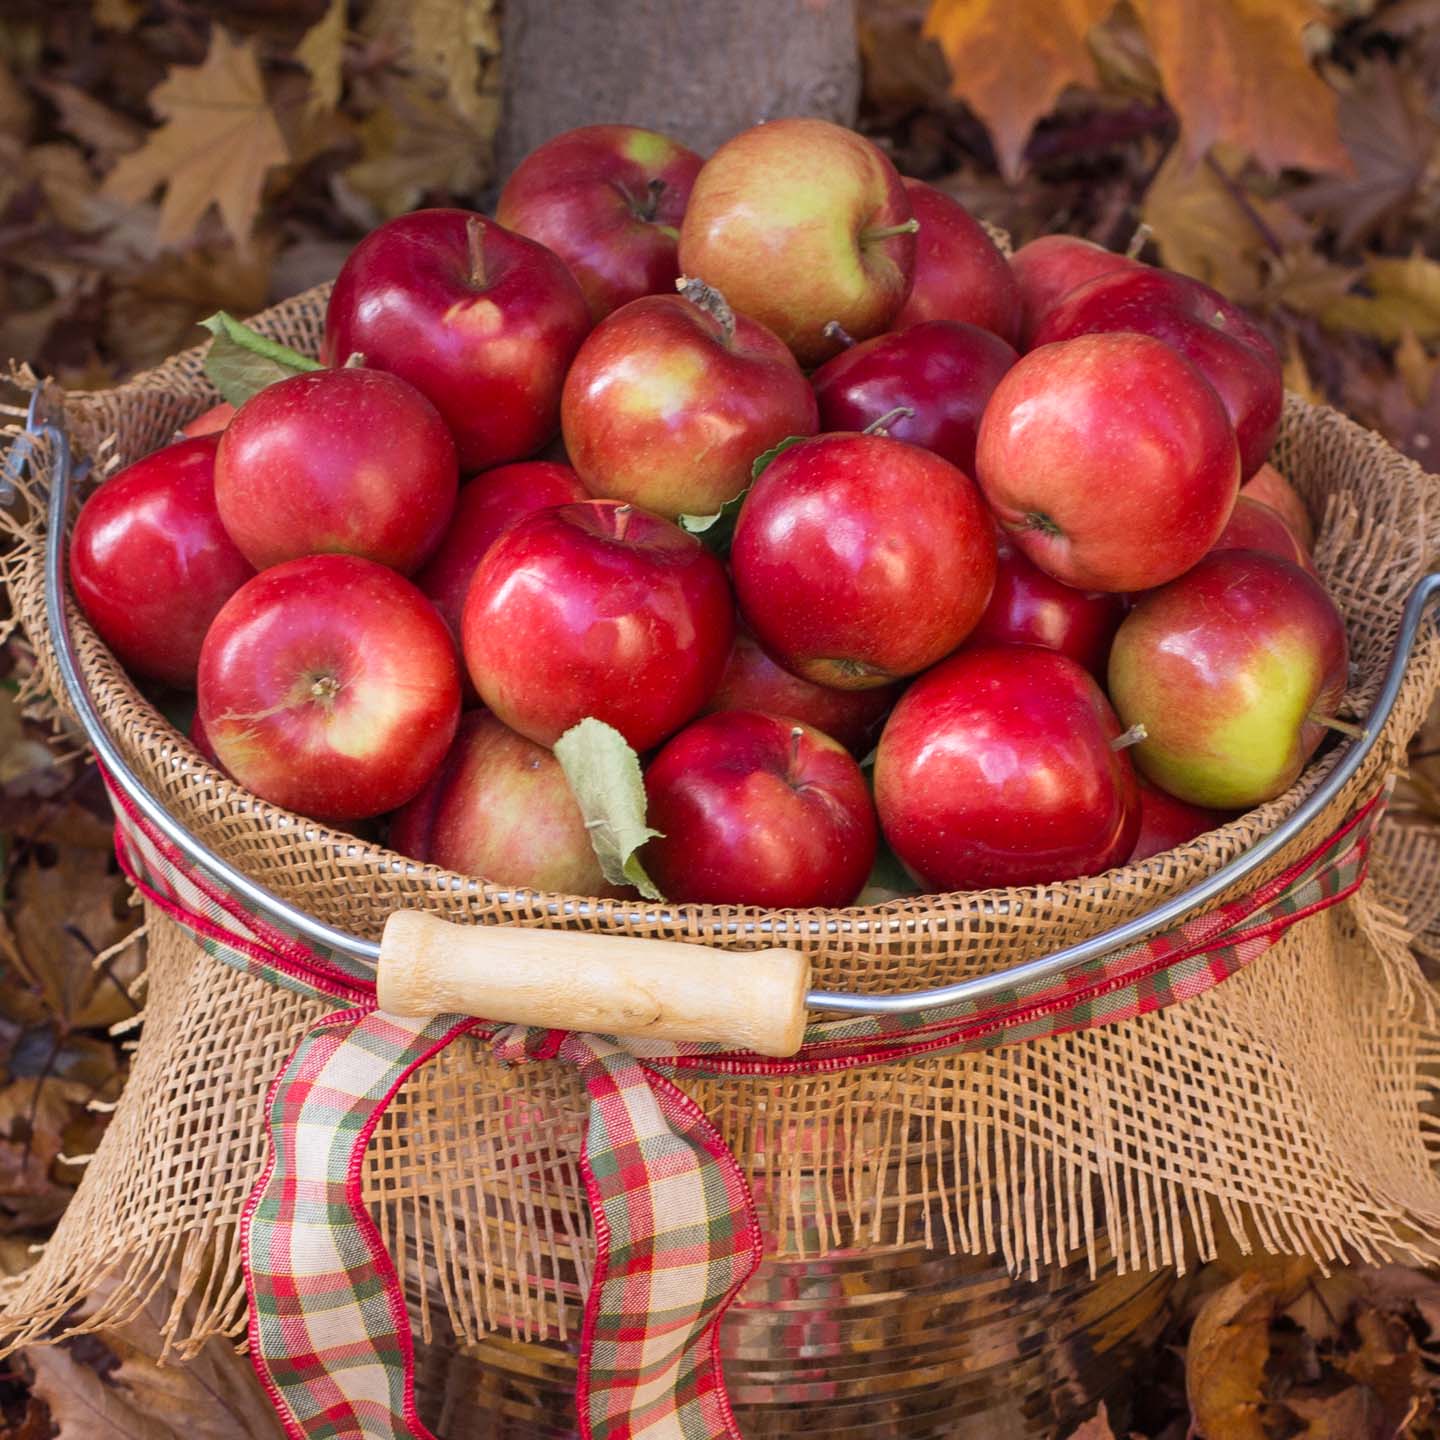 Wicker basket full of apples.